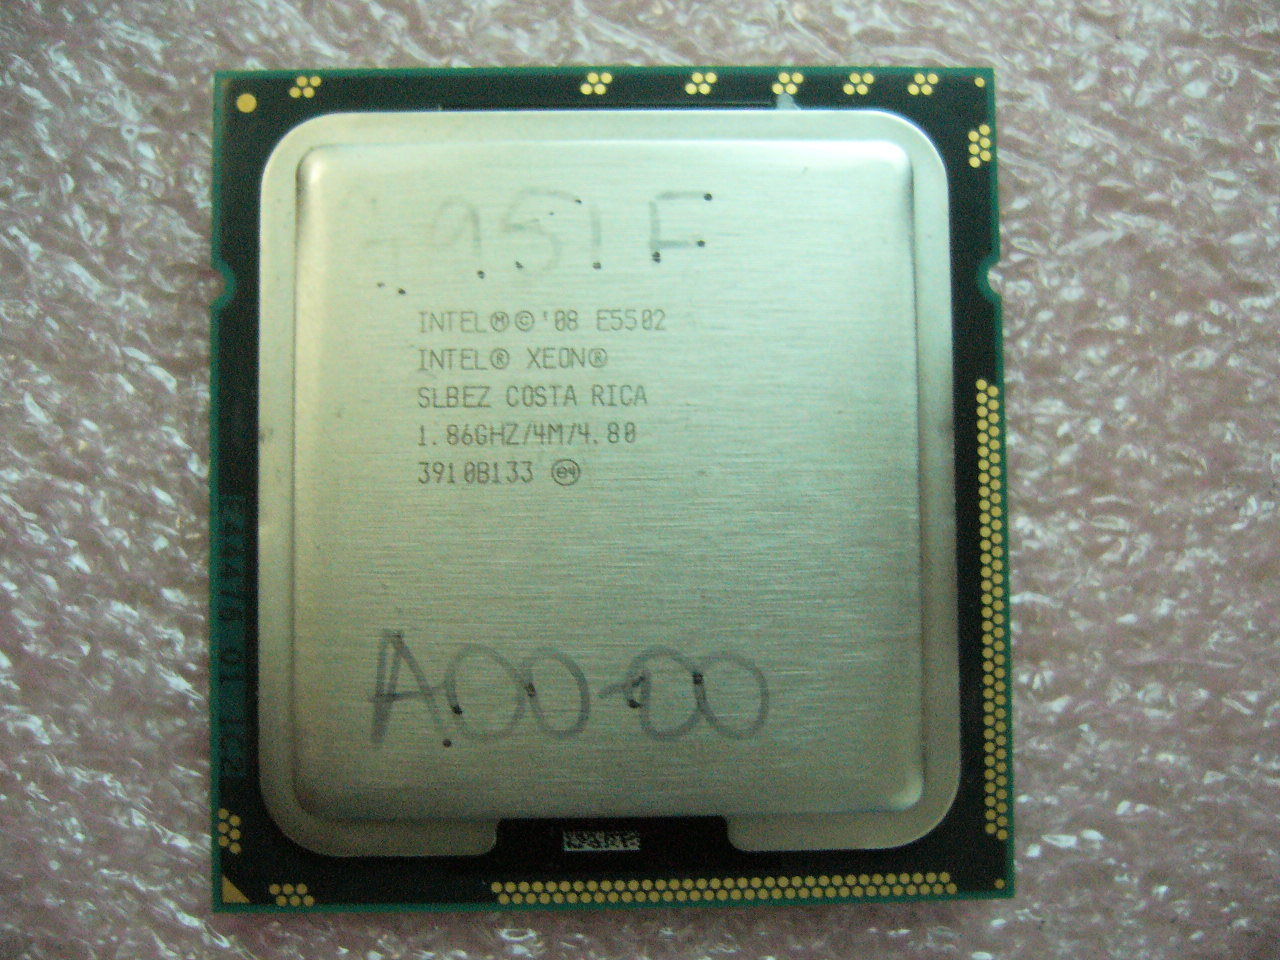 QTY 1x INTEL Dual-Cores CPU E5502 1.86GHZ/4MB 4.80T/s QPI LGA1366 SLBEZ